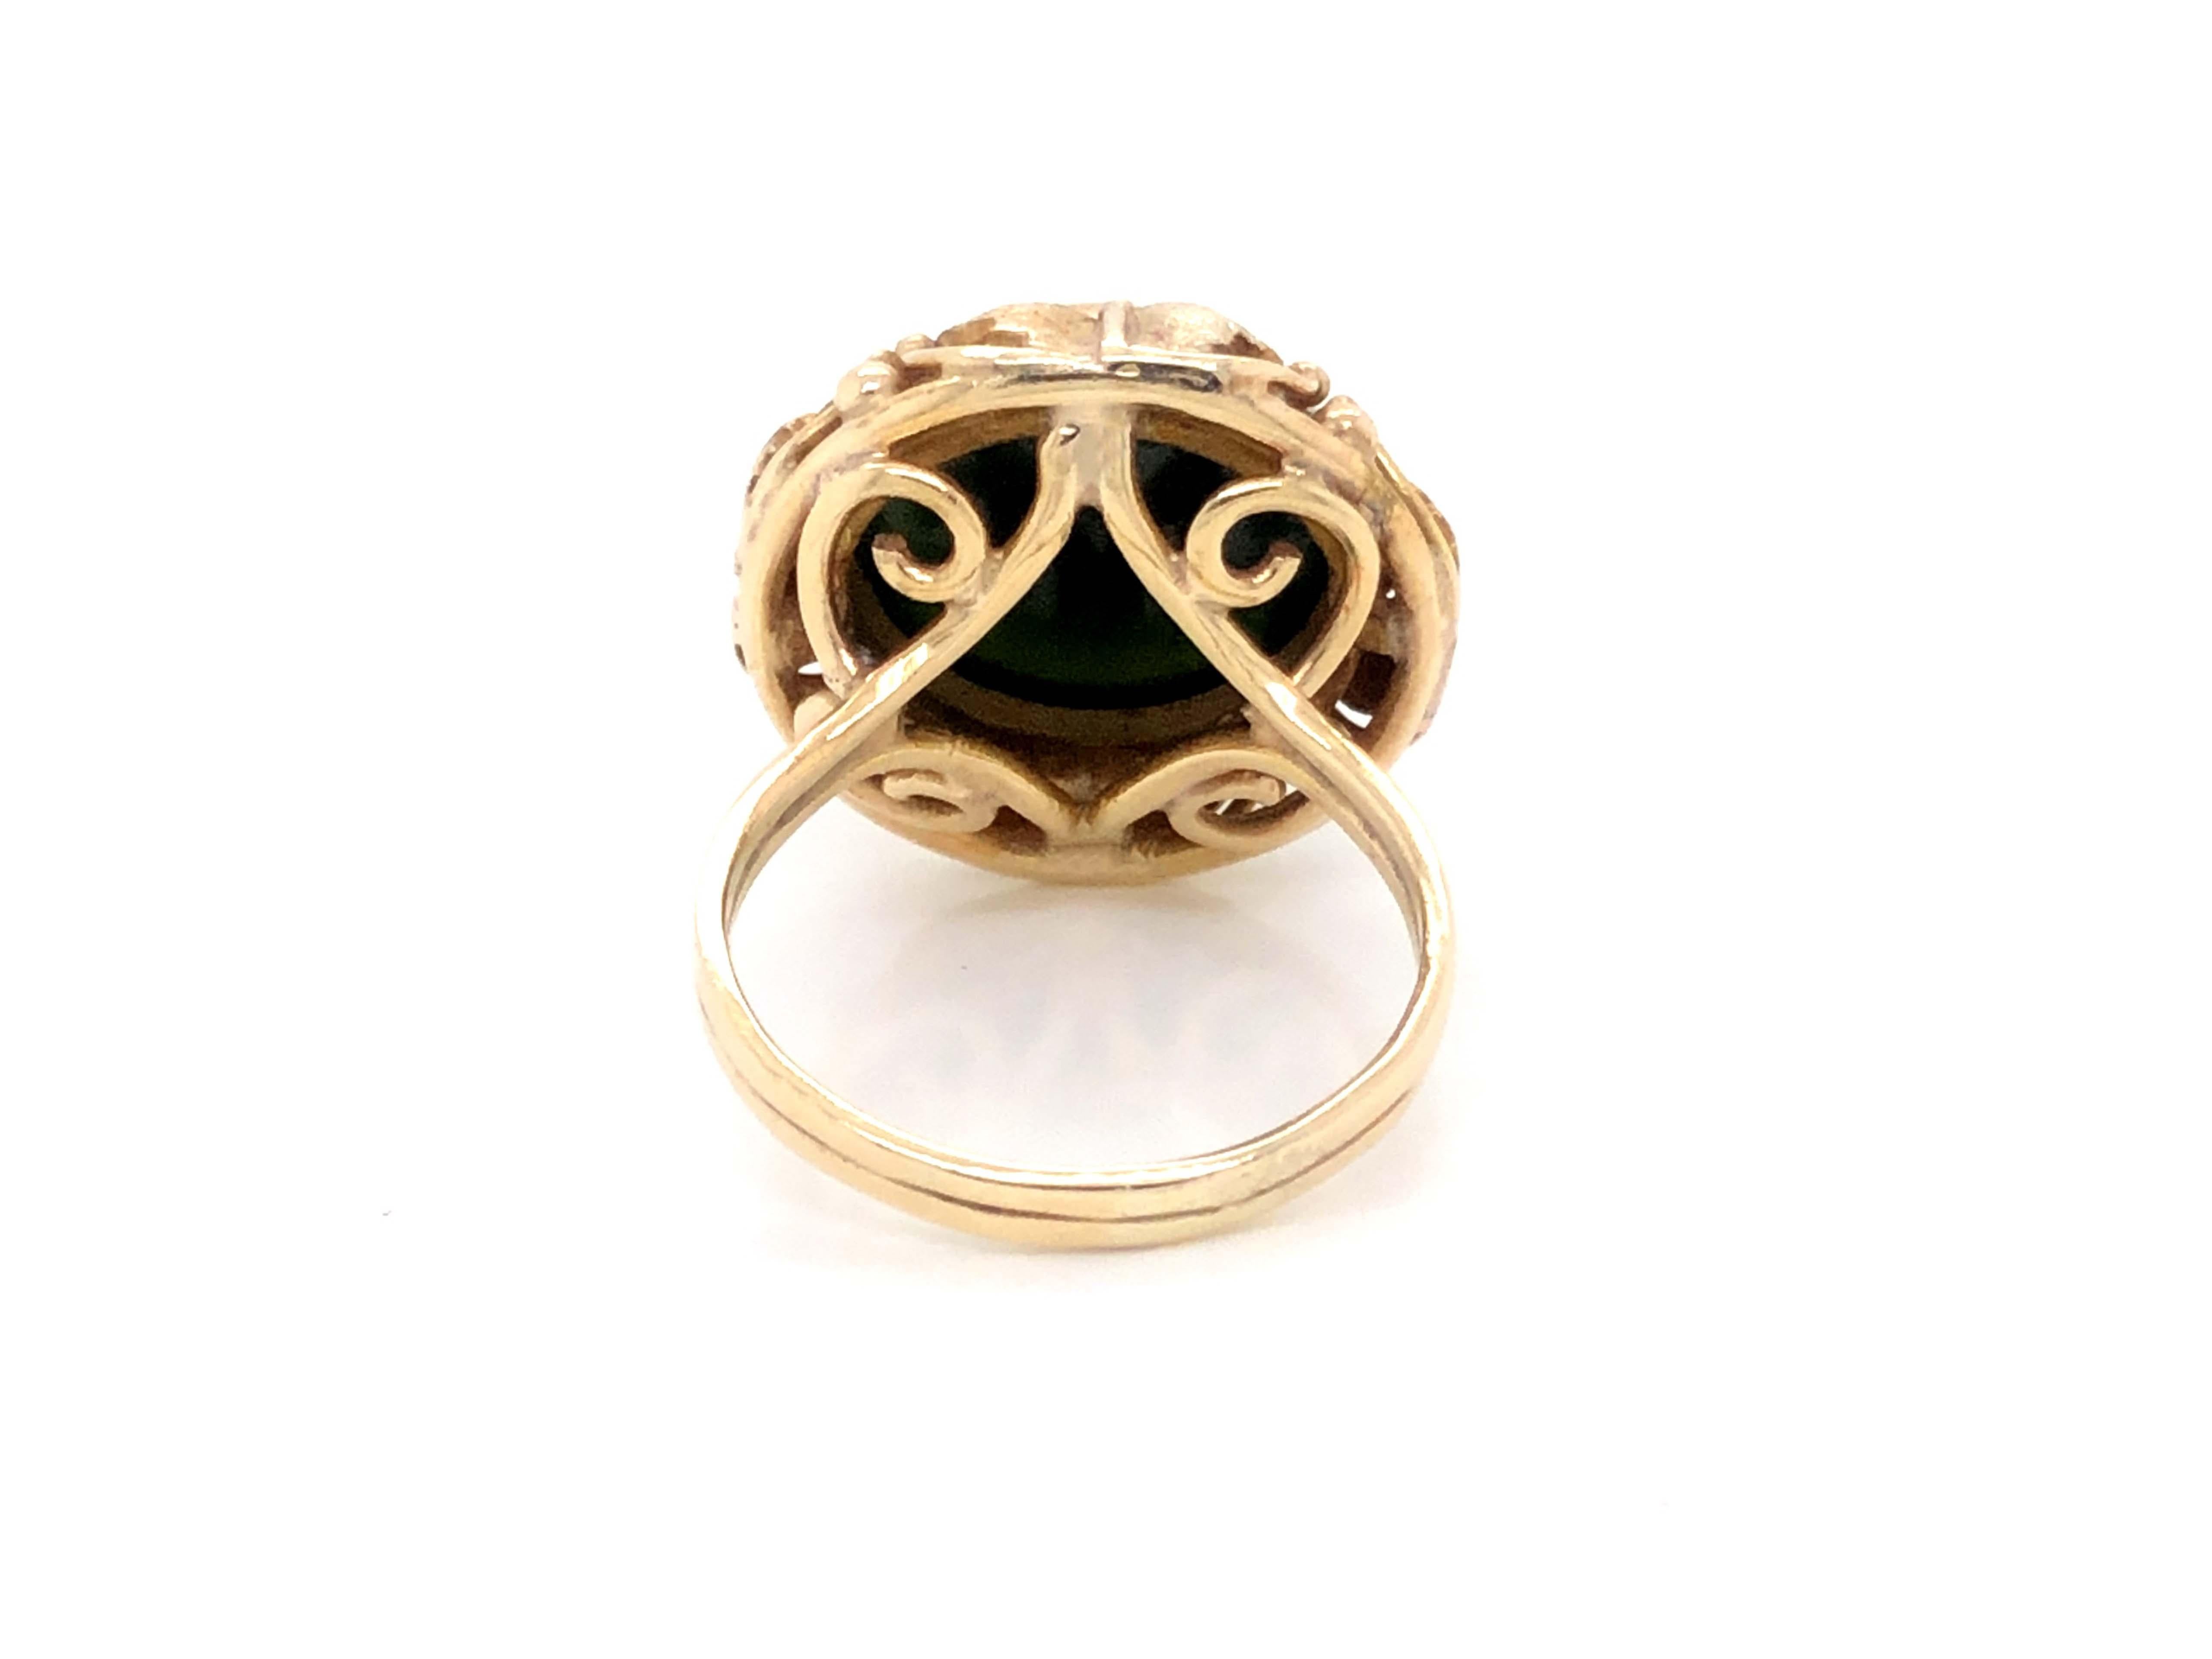 Women's Vintage Round Black Jade Ring with Leaf Design, 14k Yellow Gold